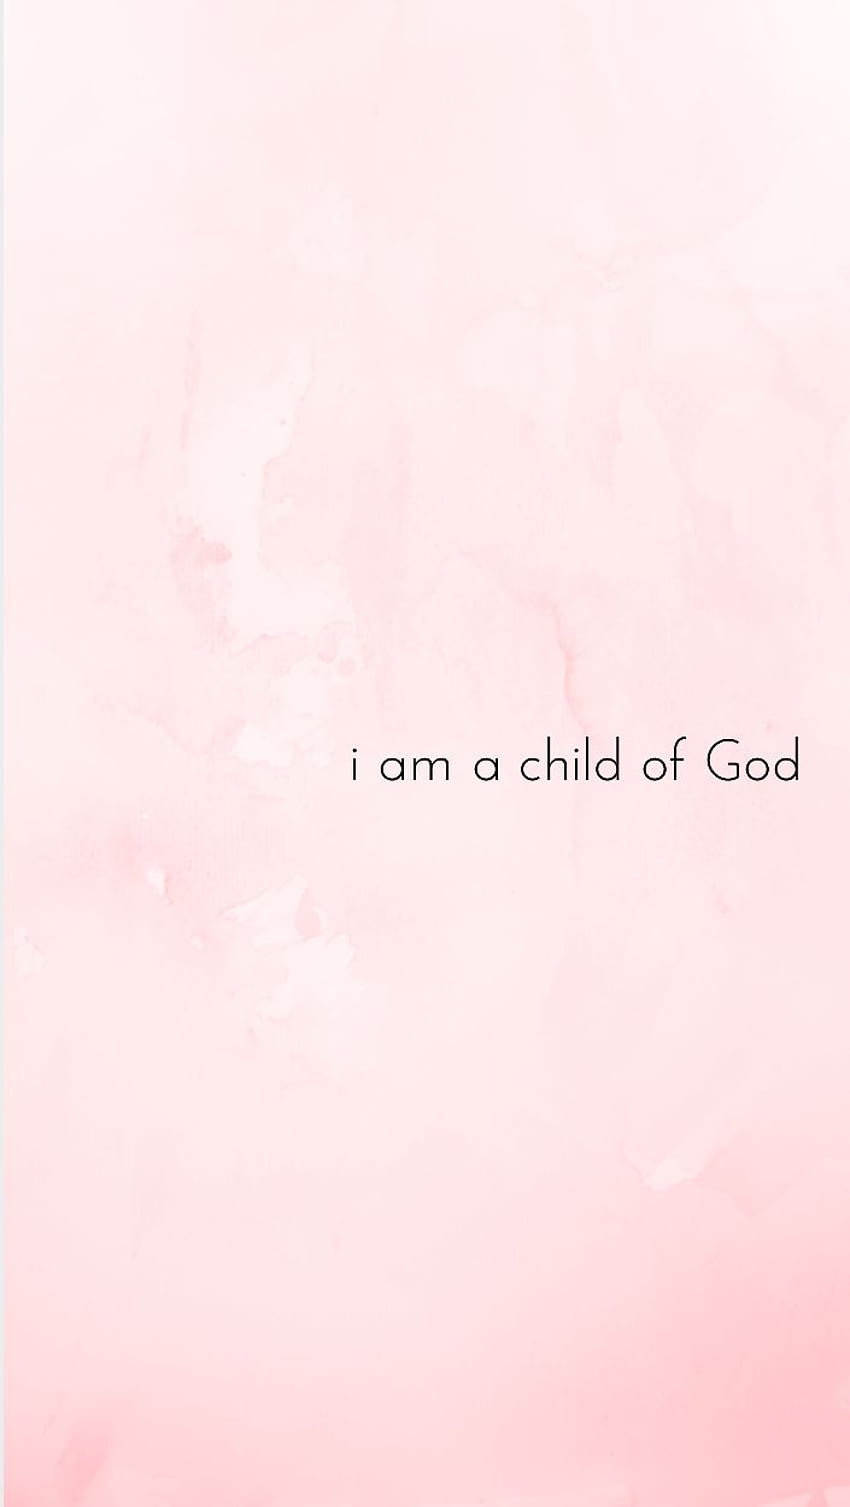 I am a child of god - Christian iPhone